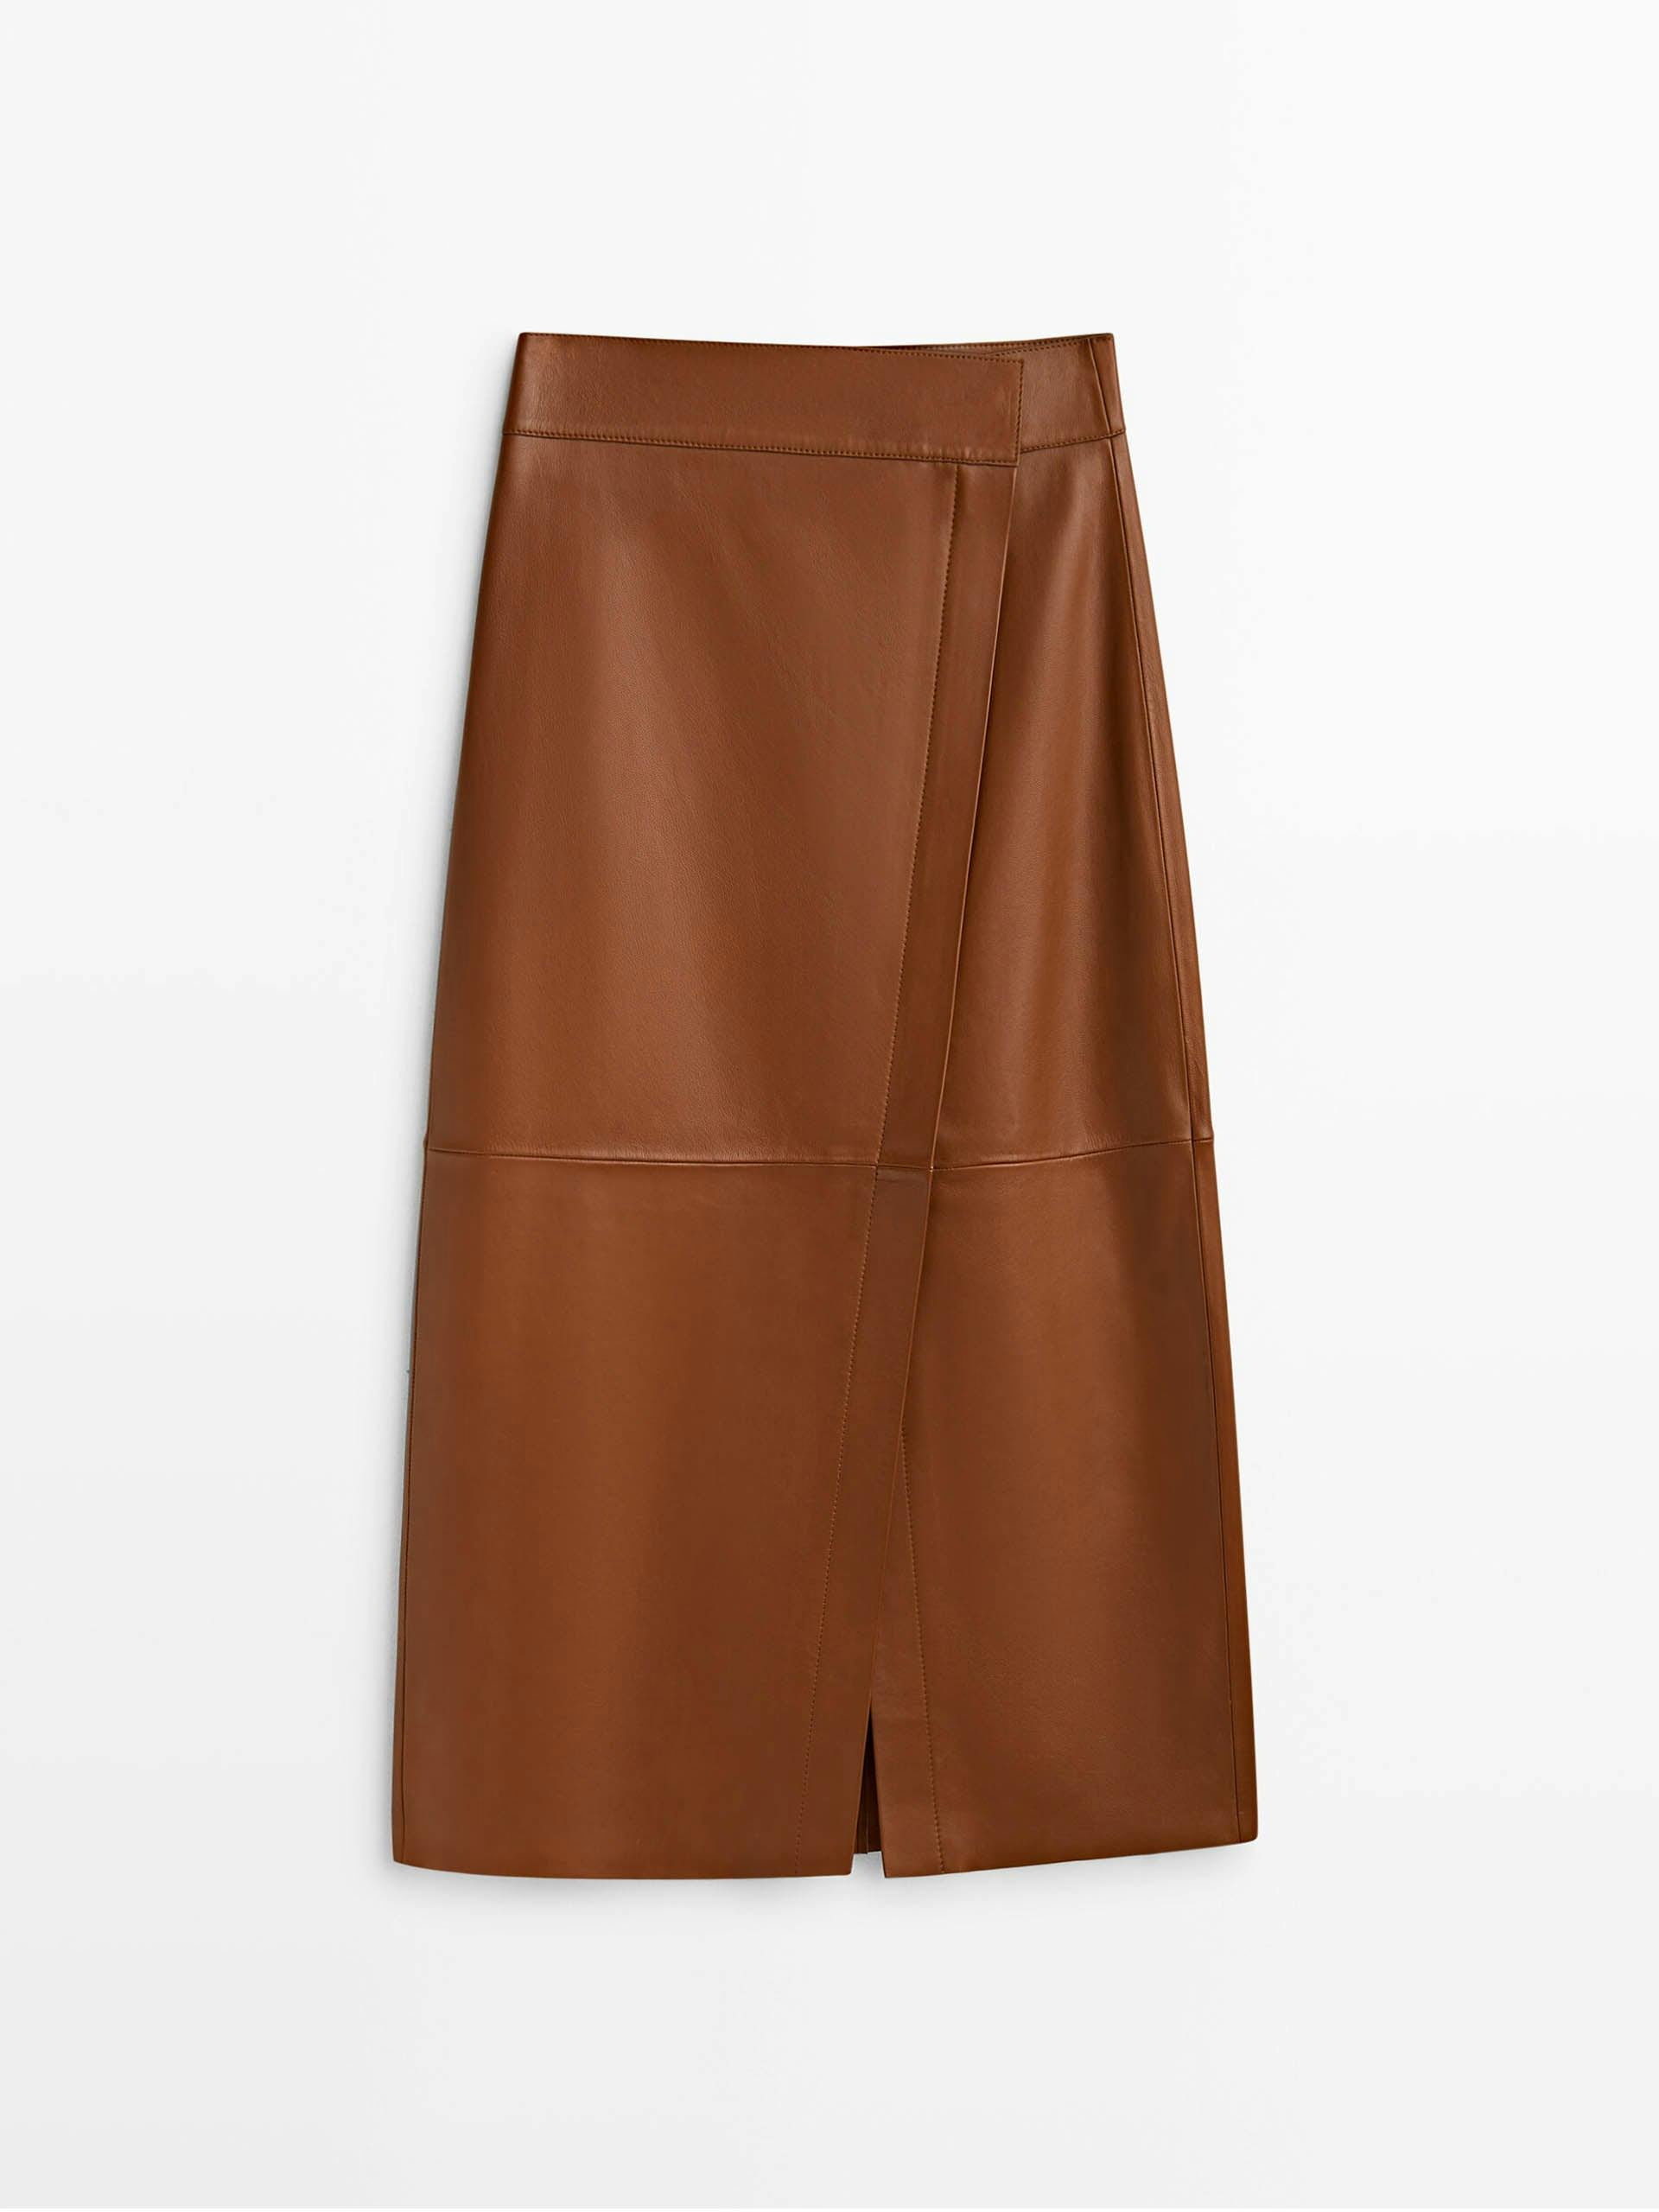 Brown leather midi pencil skirt